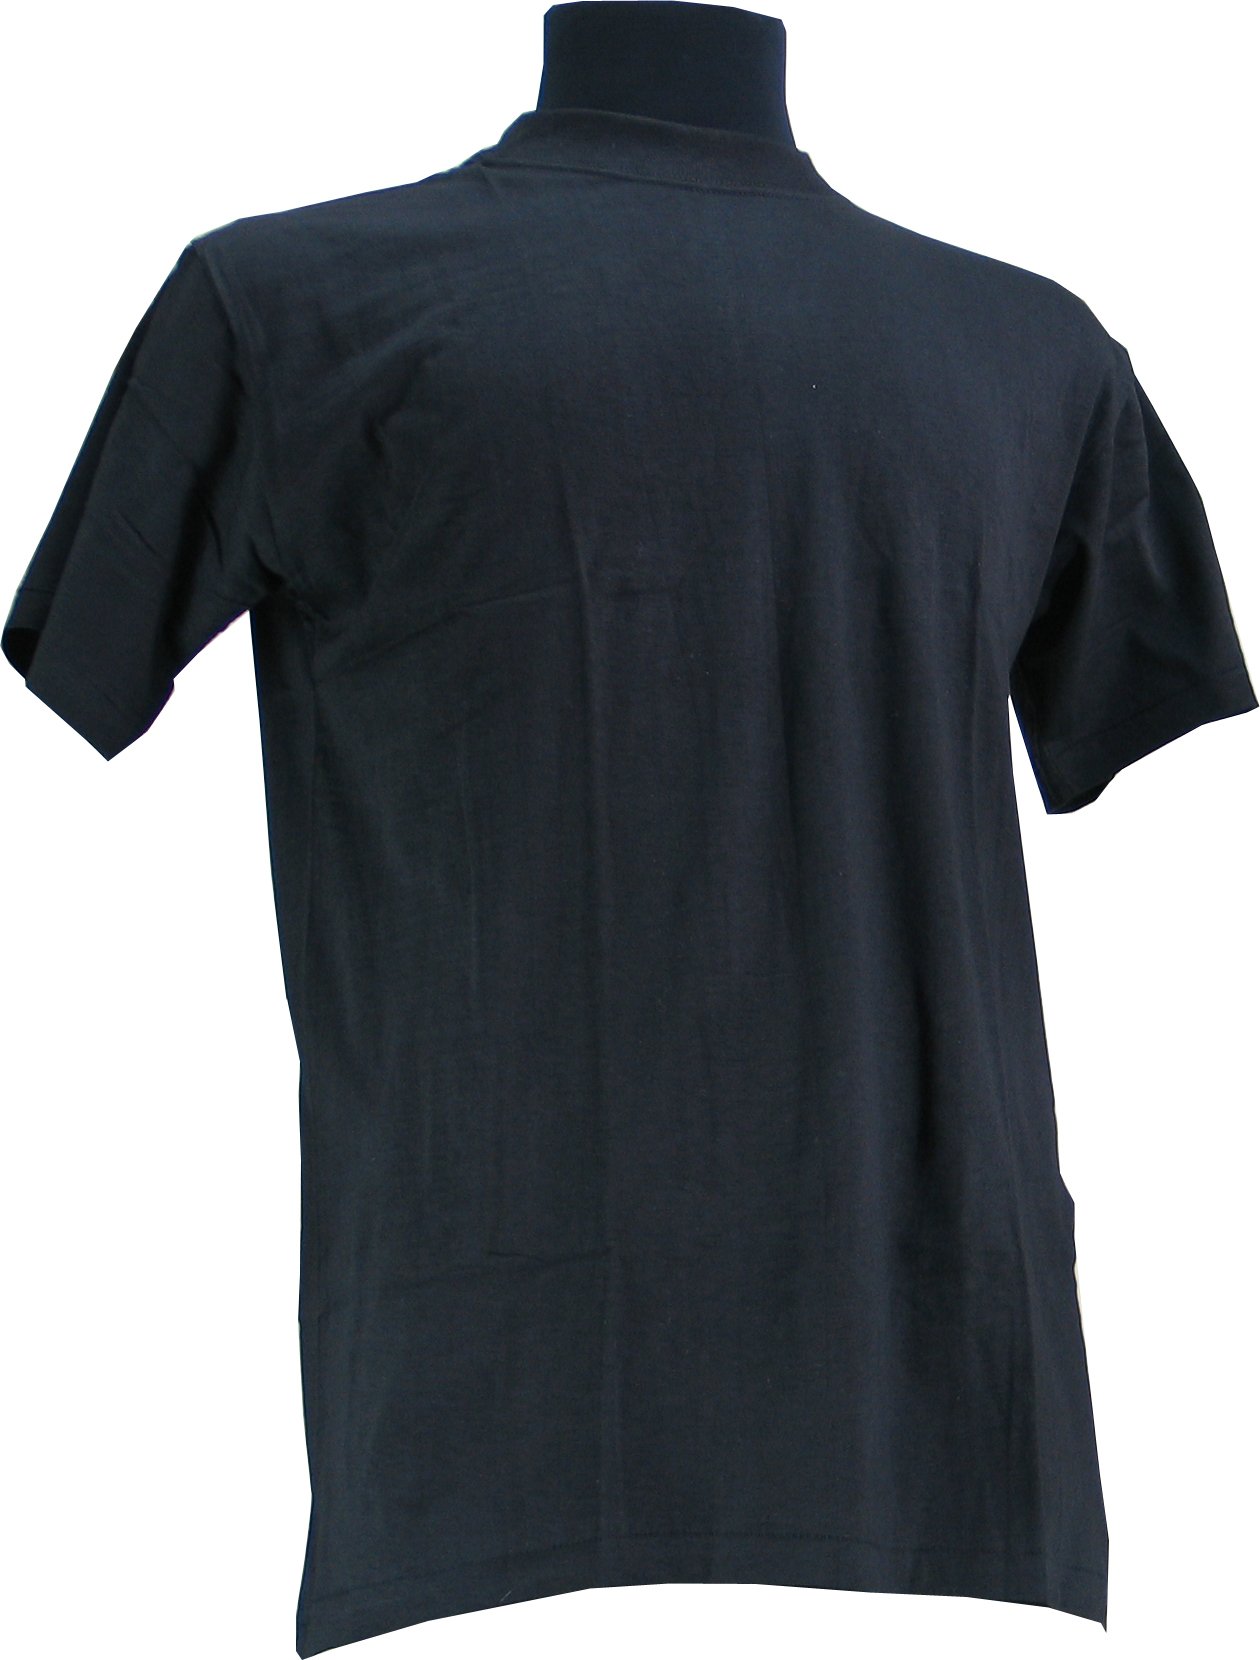 COMMANDO Crew Neck T-Shirt - COMMANDO NEW : Shop our Wide Range of ...